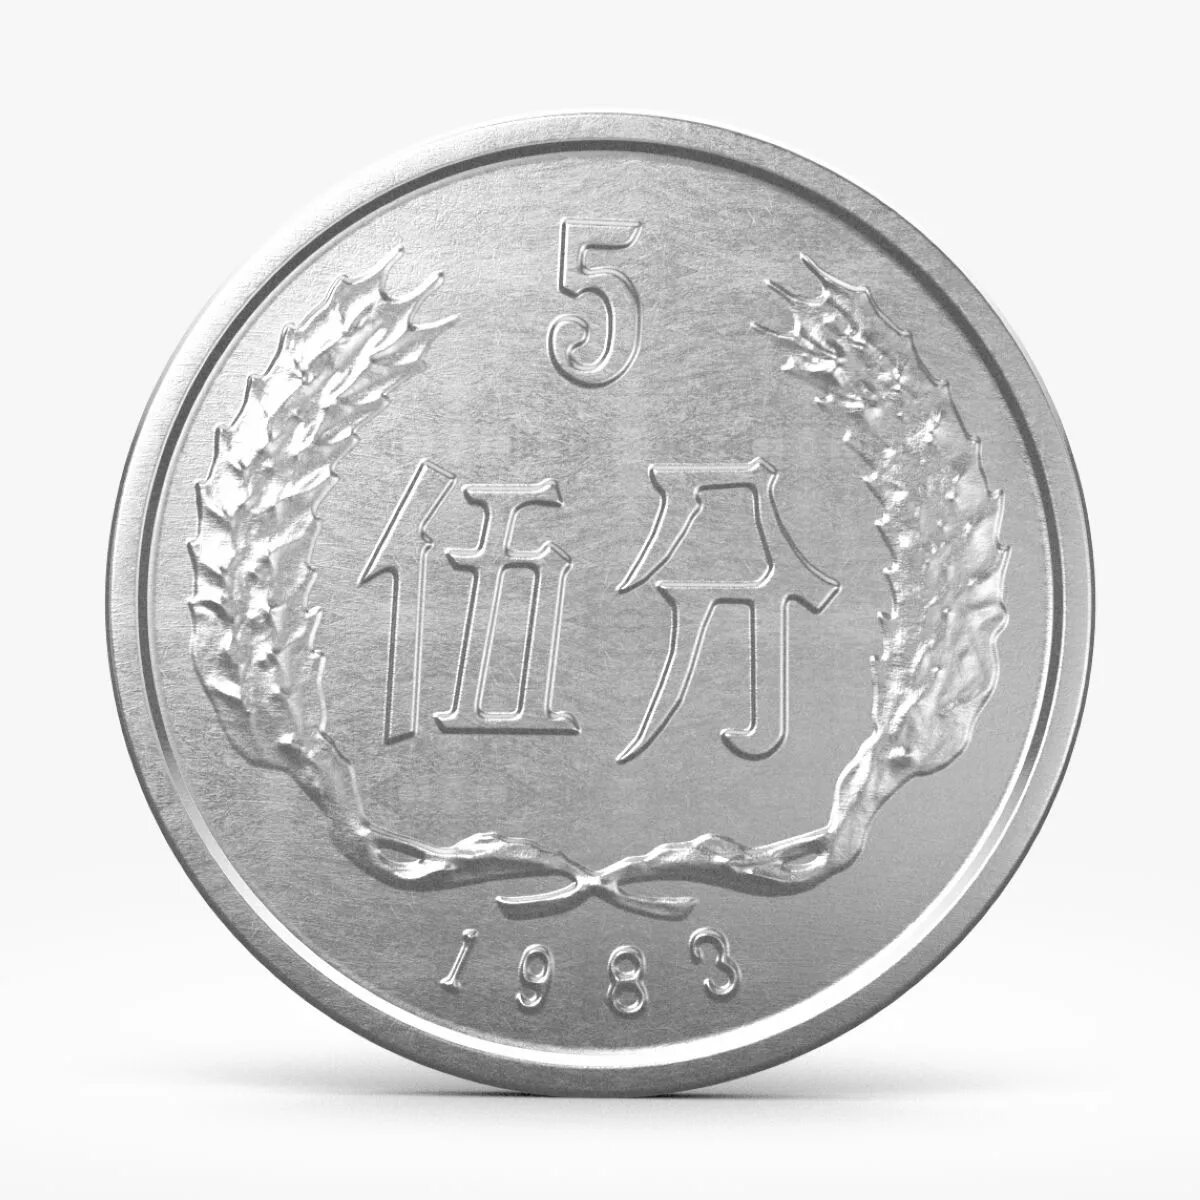 Китайский юань монеты. Фень юань. Мао Цзэдун юань монета. Юань Монетка. Фэни монета Китай.